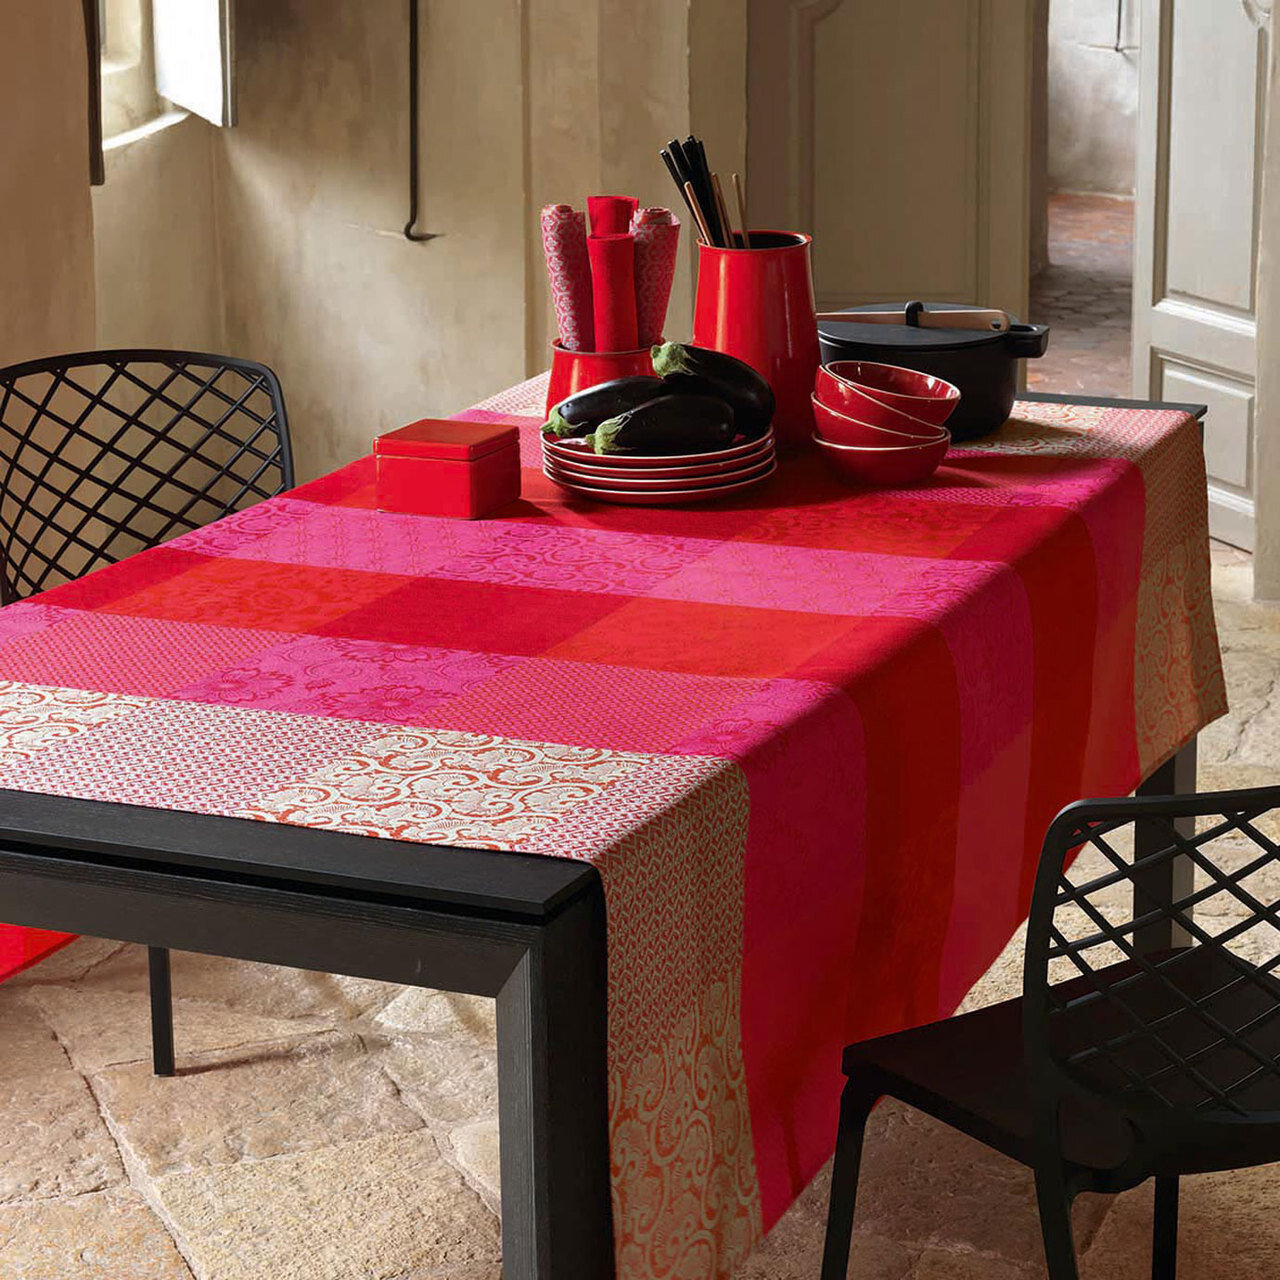 Le Jacquard Francais Tablecloth Kyoto Cherry 59 x 86 Cotton and Acrylicic